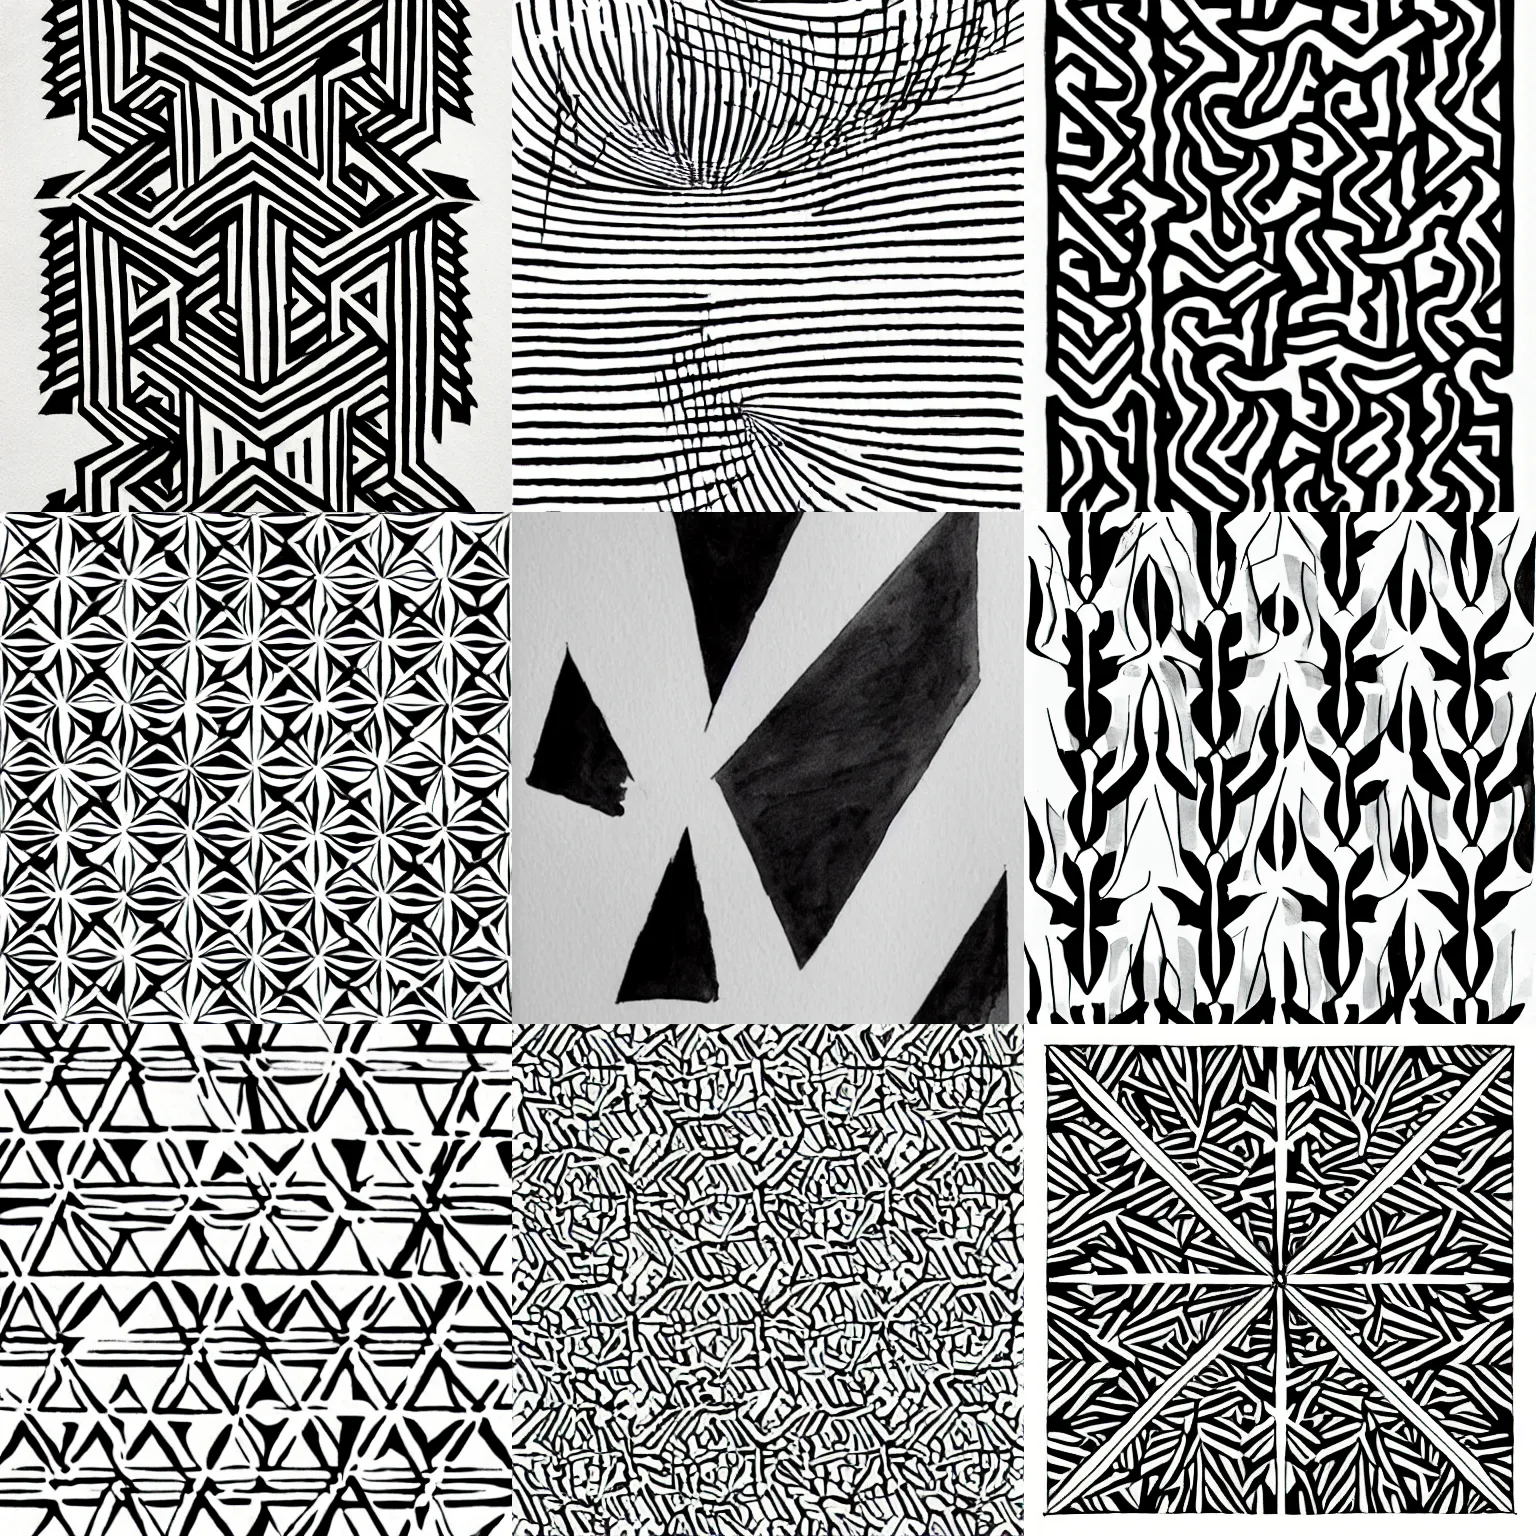 Prompt: ink drawing of geometric patterns, minimalism, modern